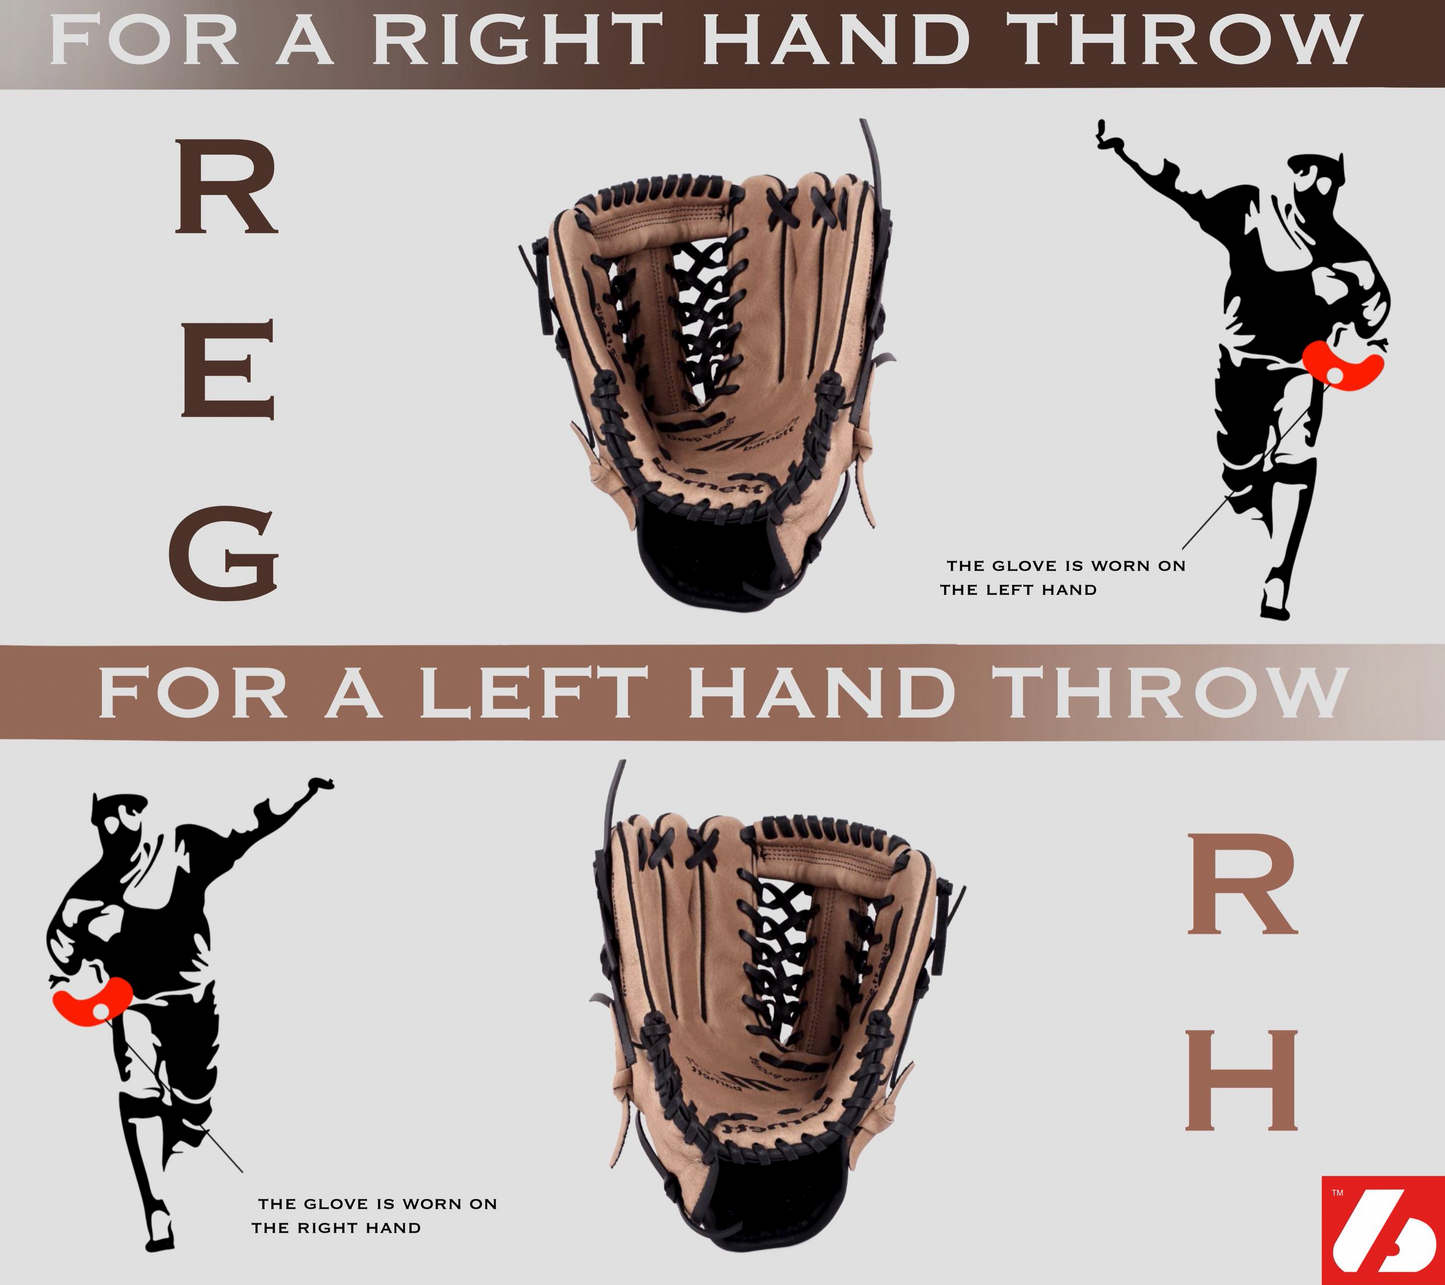 FL-130 professional baseball glove, full grain leather, outfield, softball, 13''